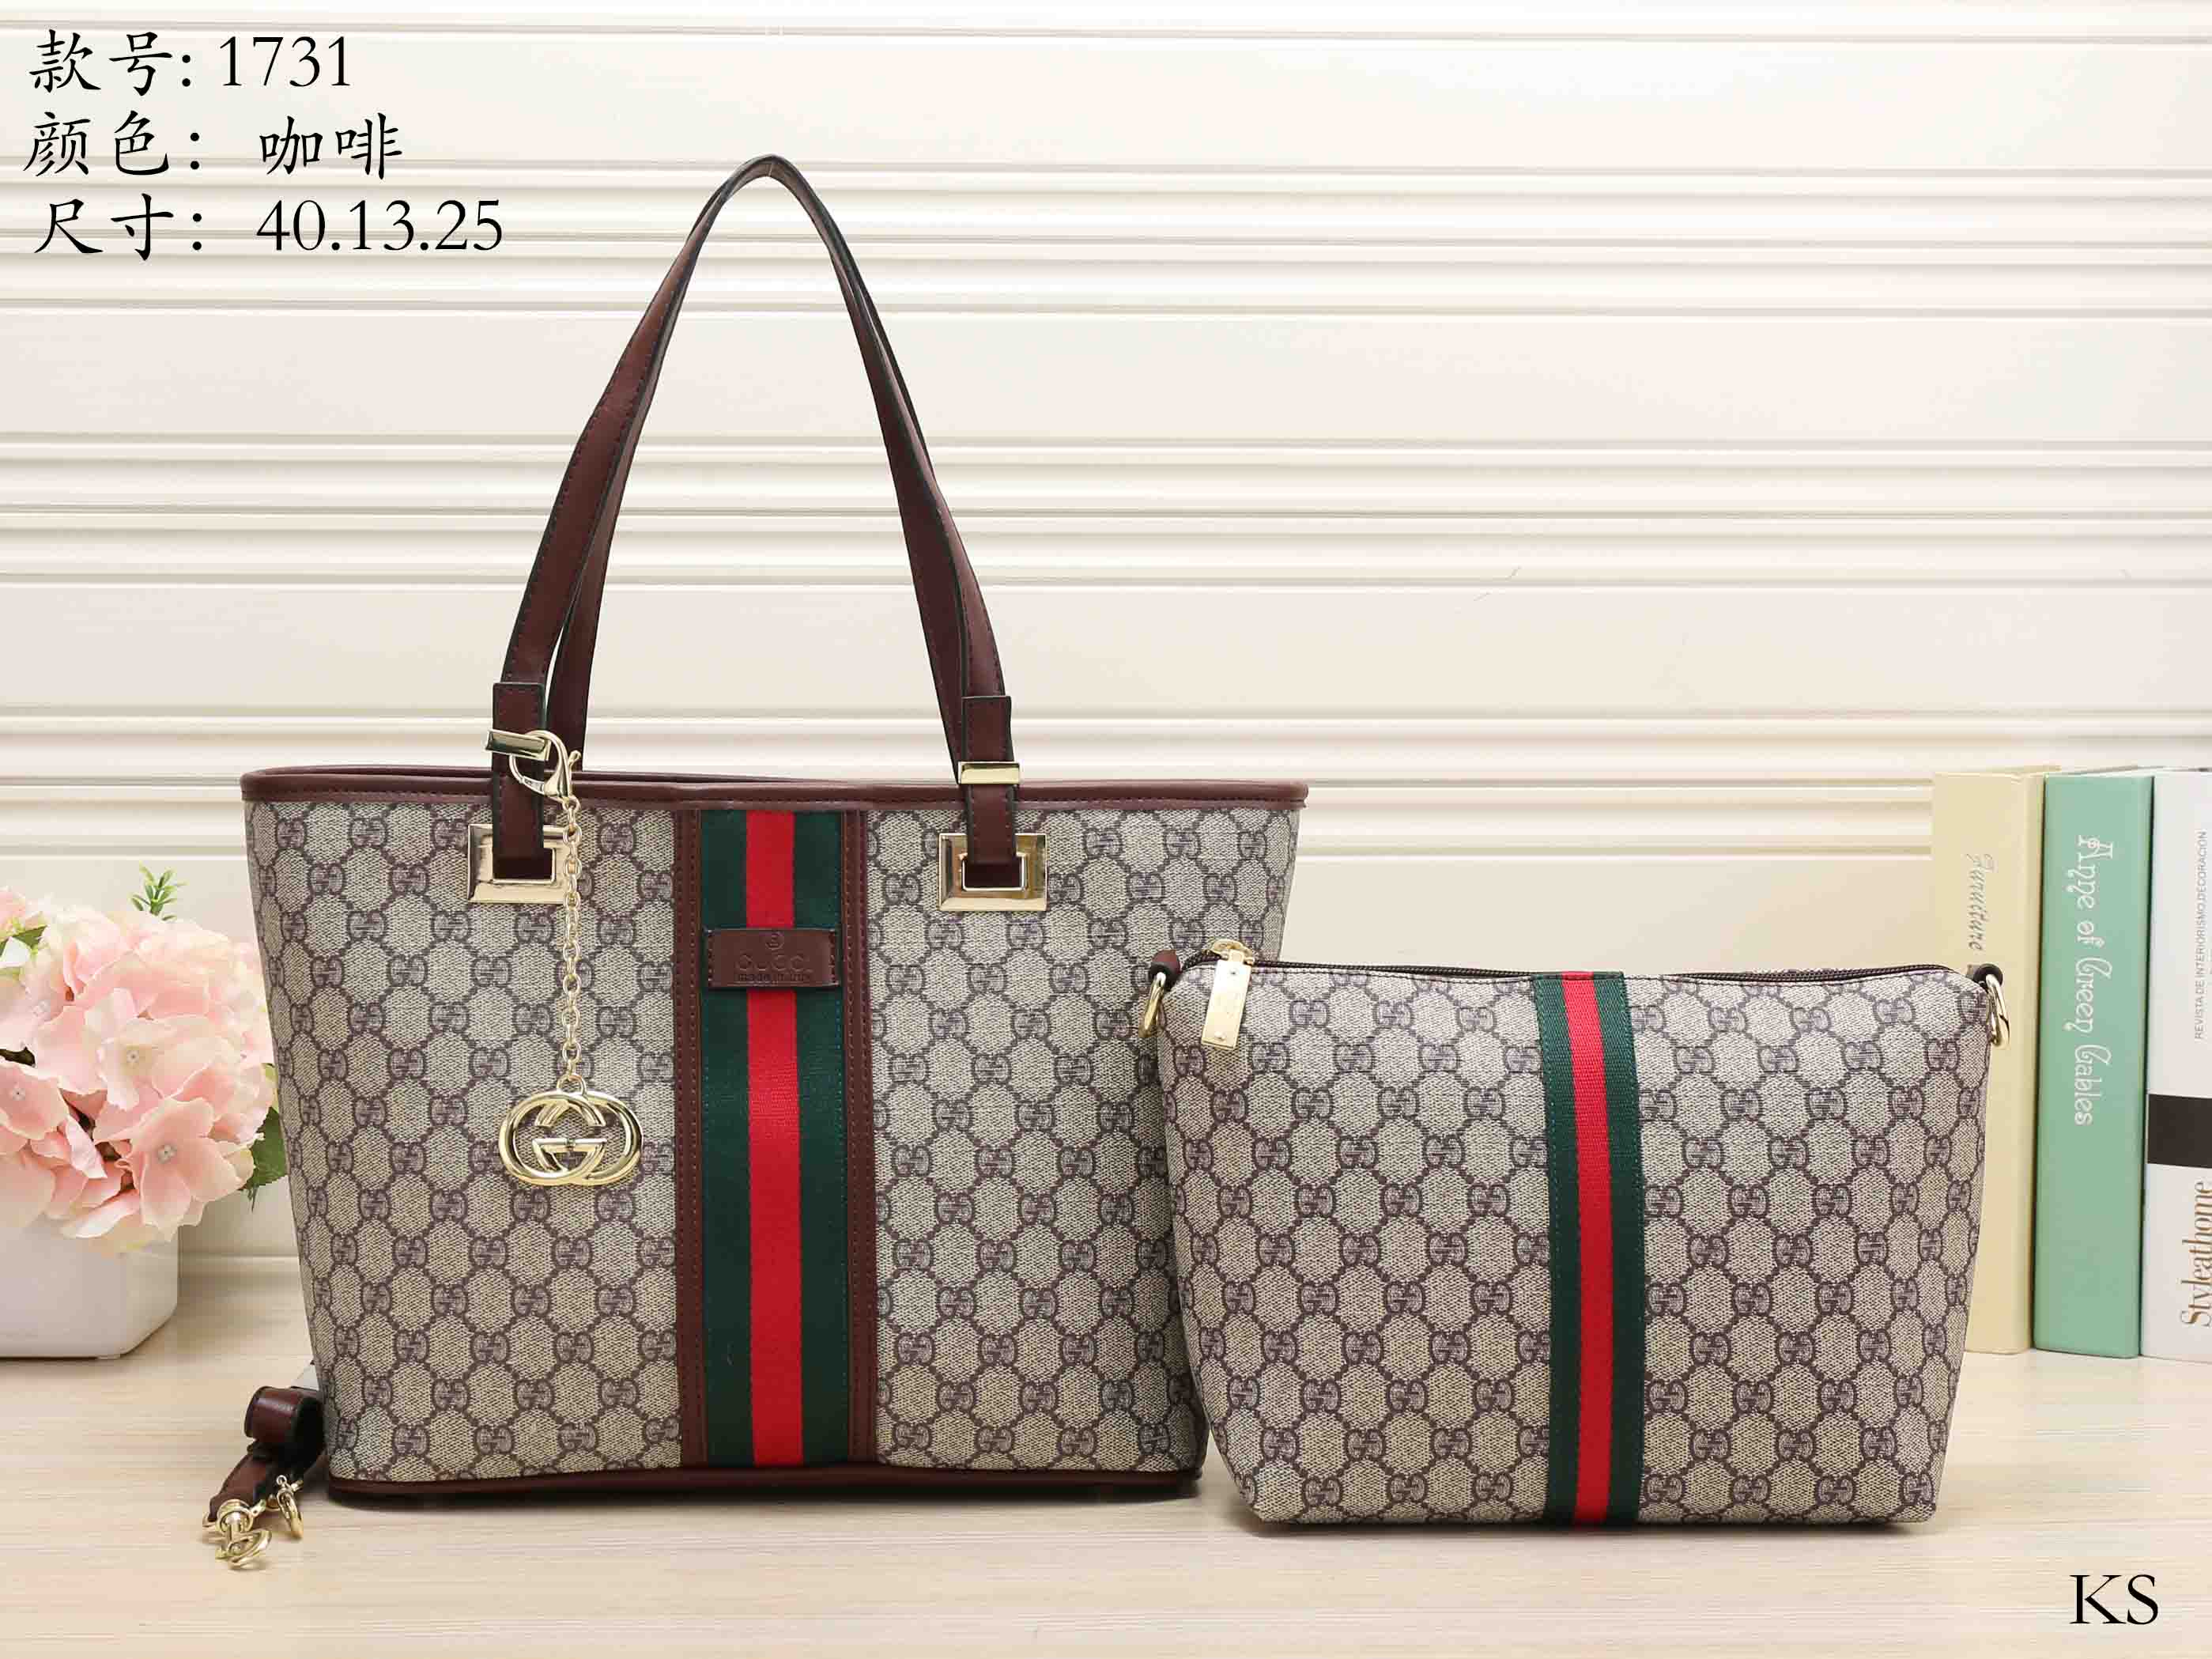 Gucci Handbags Women Price | semashow.com